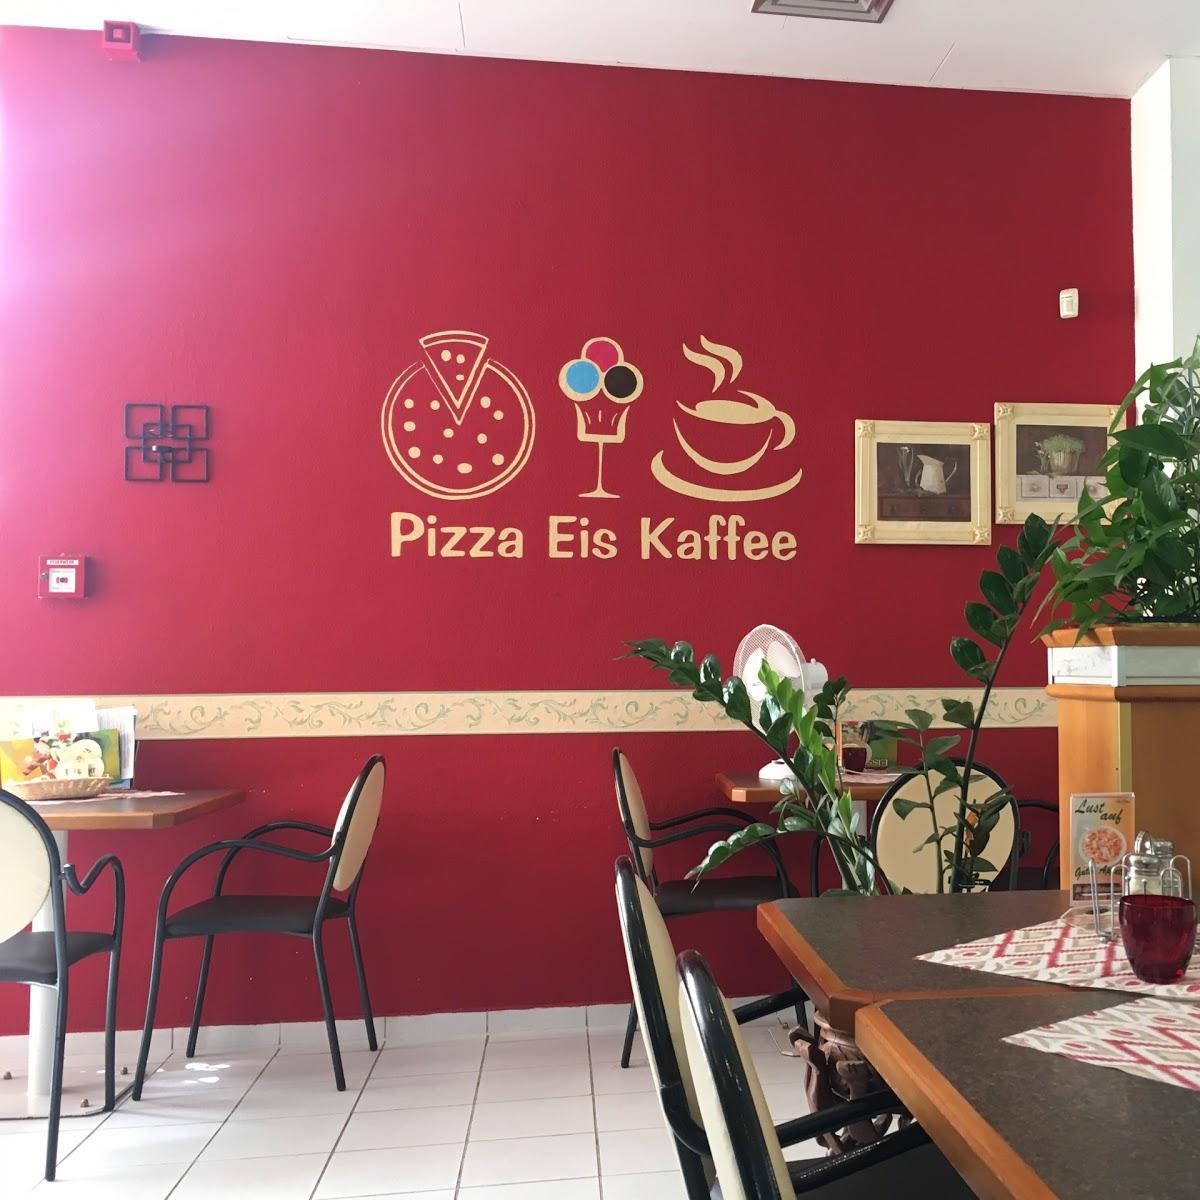 Restaurant "La Palma Pizza Service" in Merseburg